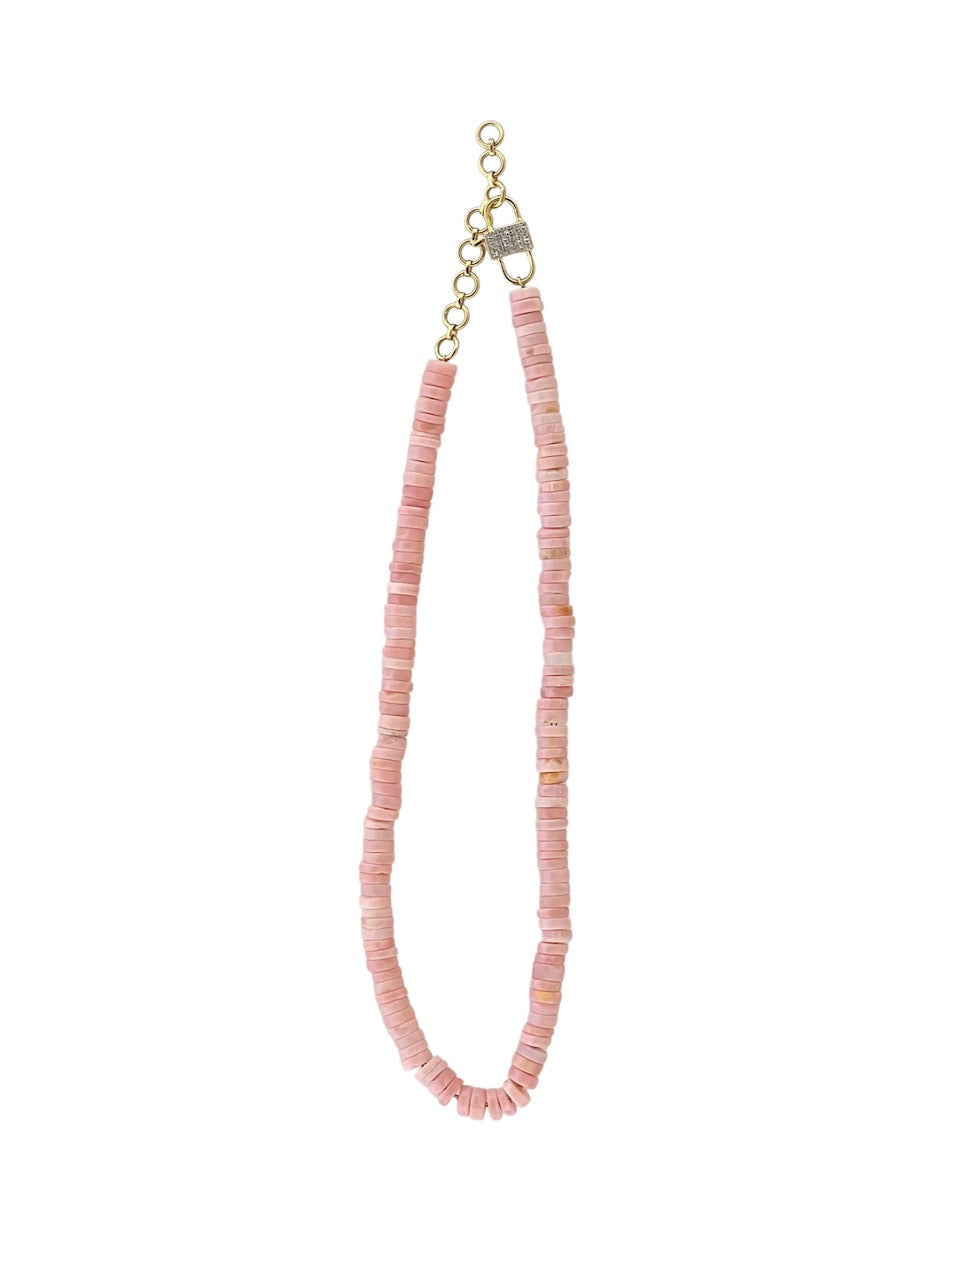 Pink Opal Heishi Beads with Pave Diamond Clasp